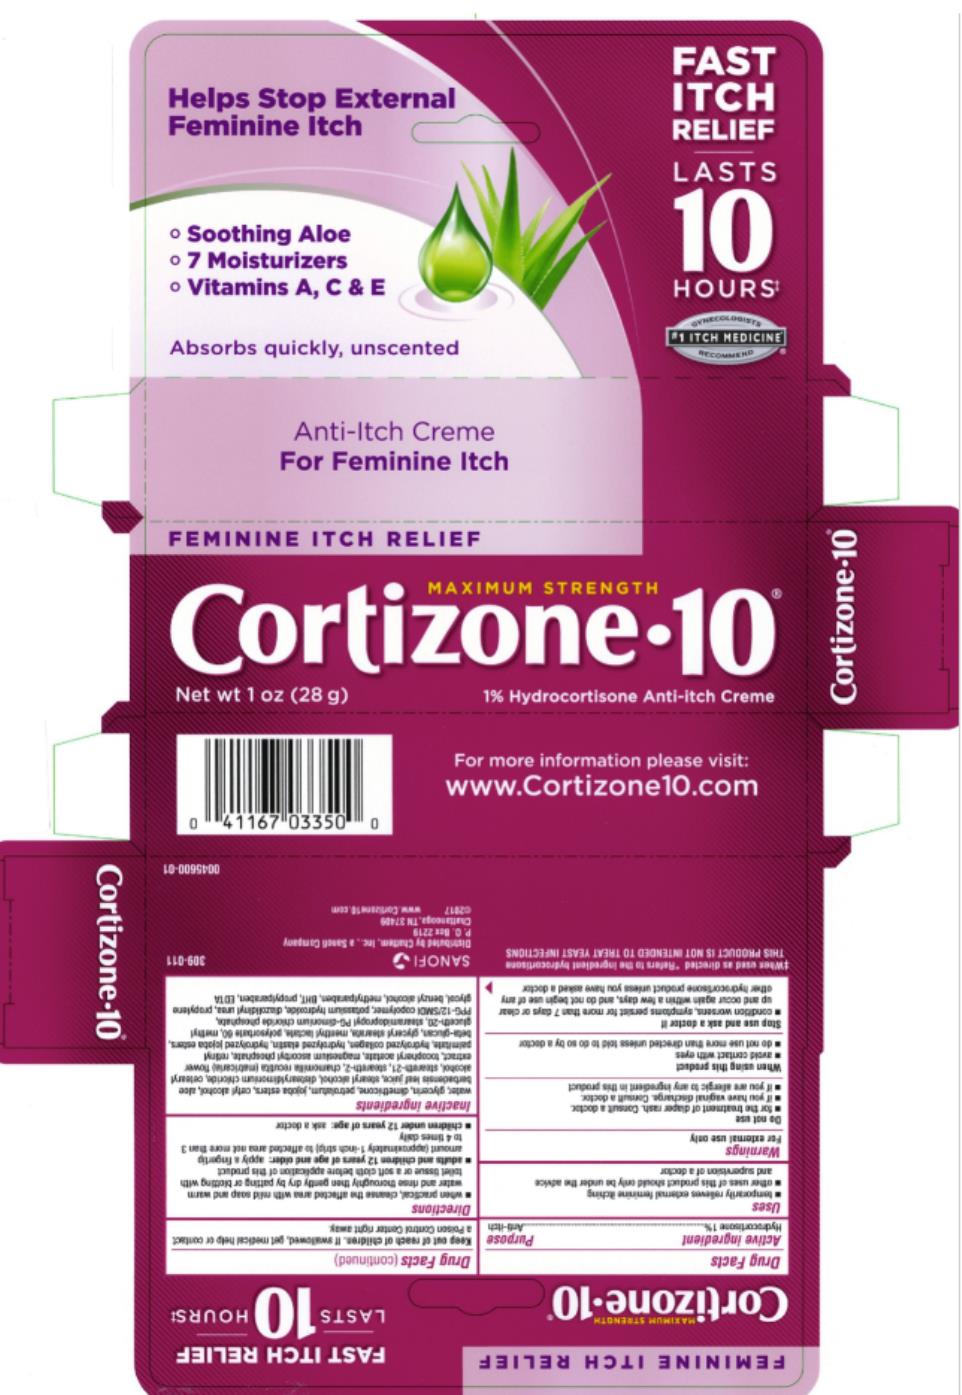 Maximum Strength 
Cotizone 10®
FEMININE ITCH RELIEF
Anti-Itch Crème
For Feminine Itch
1% Hydrocortisone Anti-Itch Creme
Net wt 1 oz (28 g)
